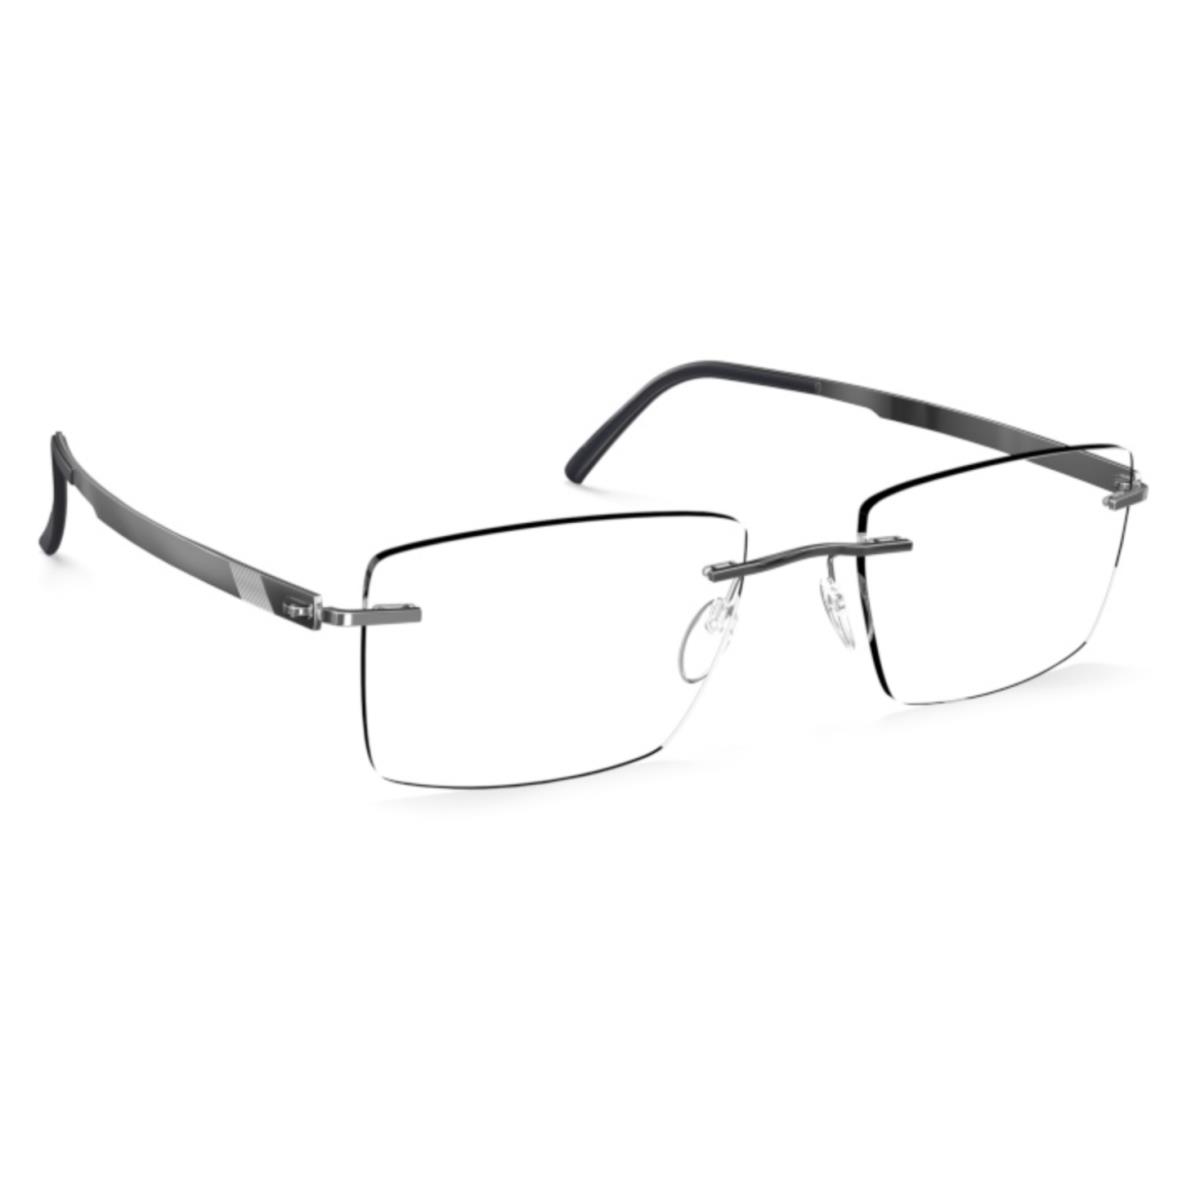 Silhouette Rimless Eyeglasses Venture 5558 KY 7000 52 23kt Gold Plated Frame